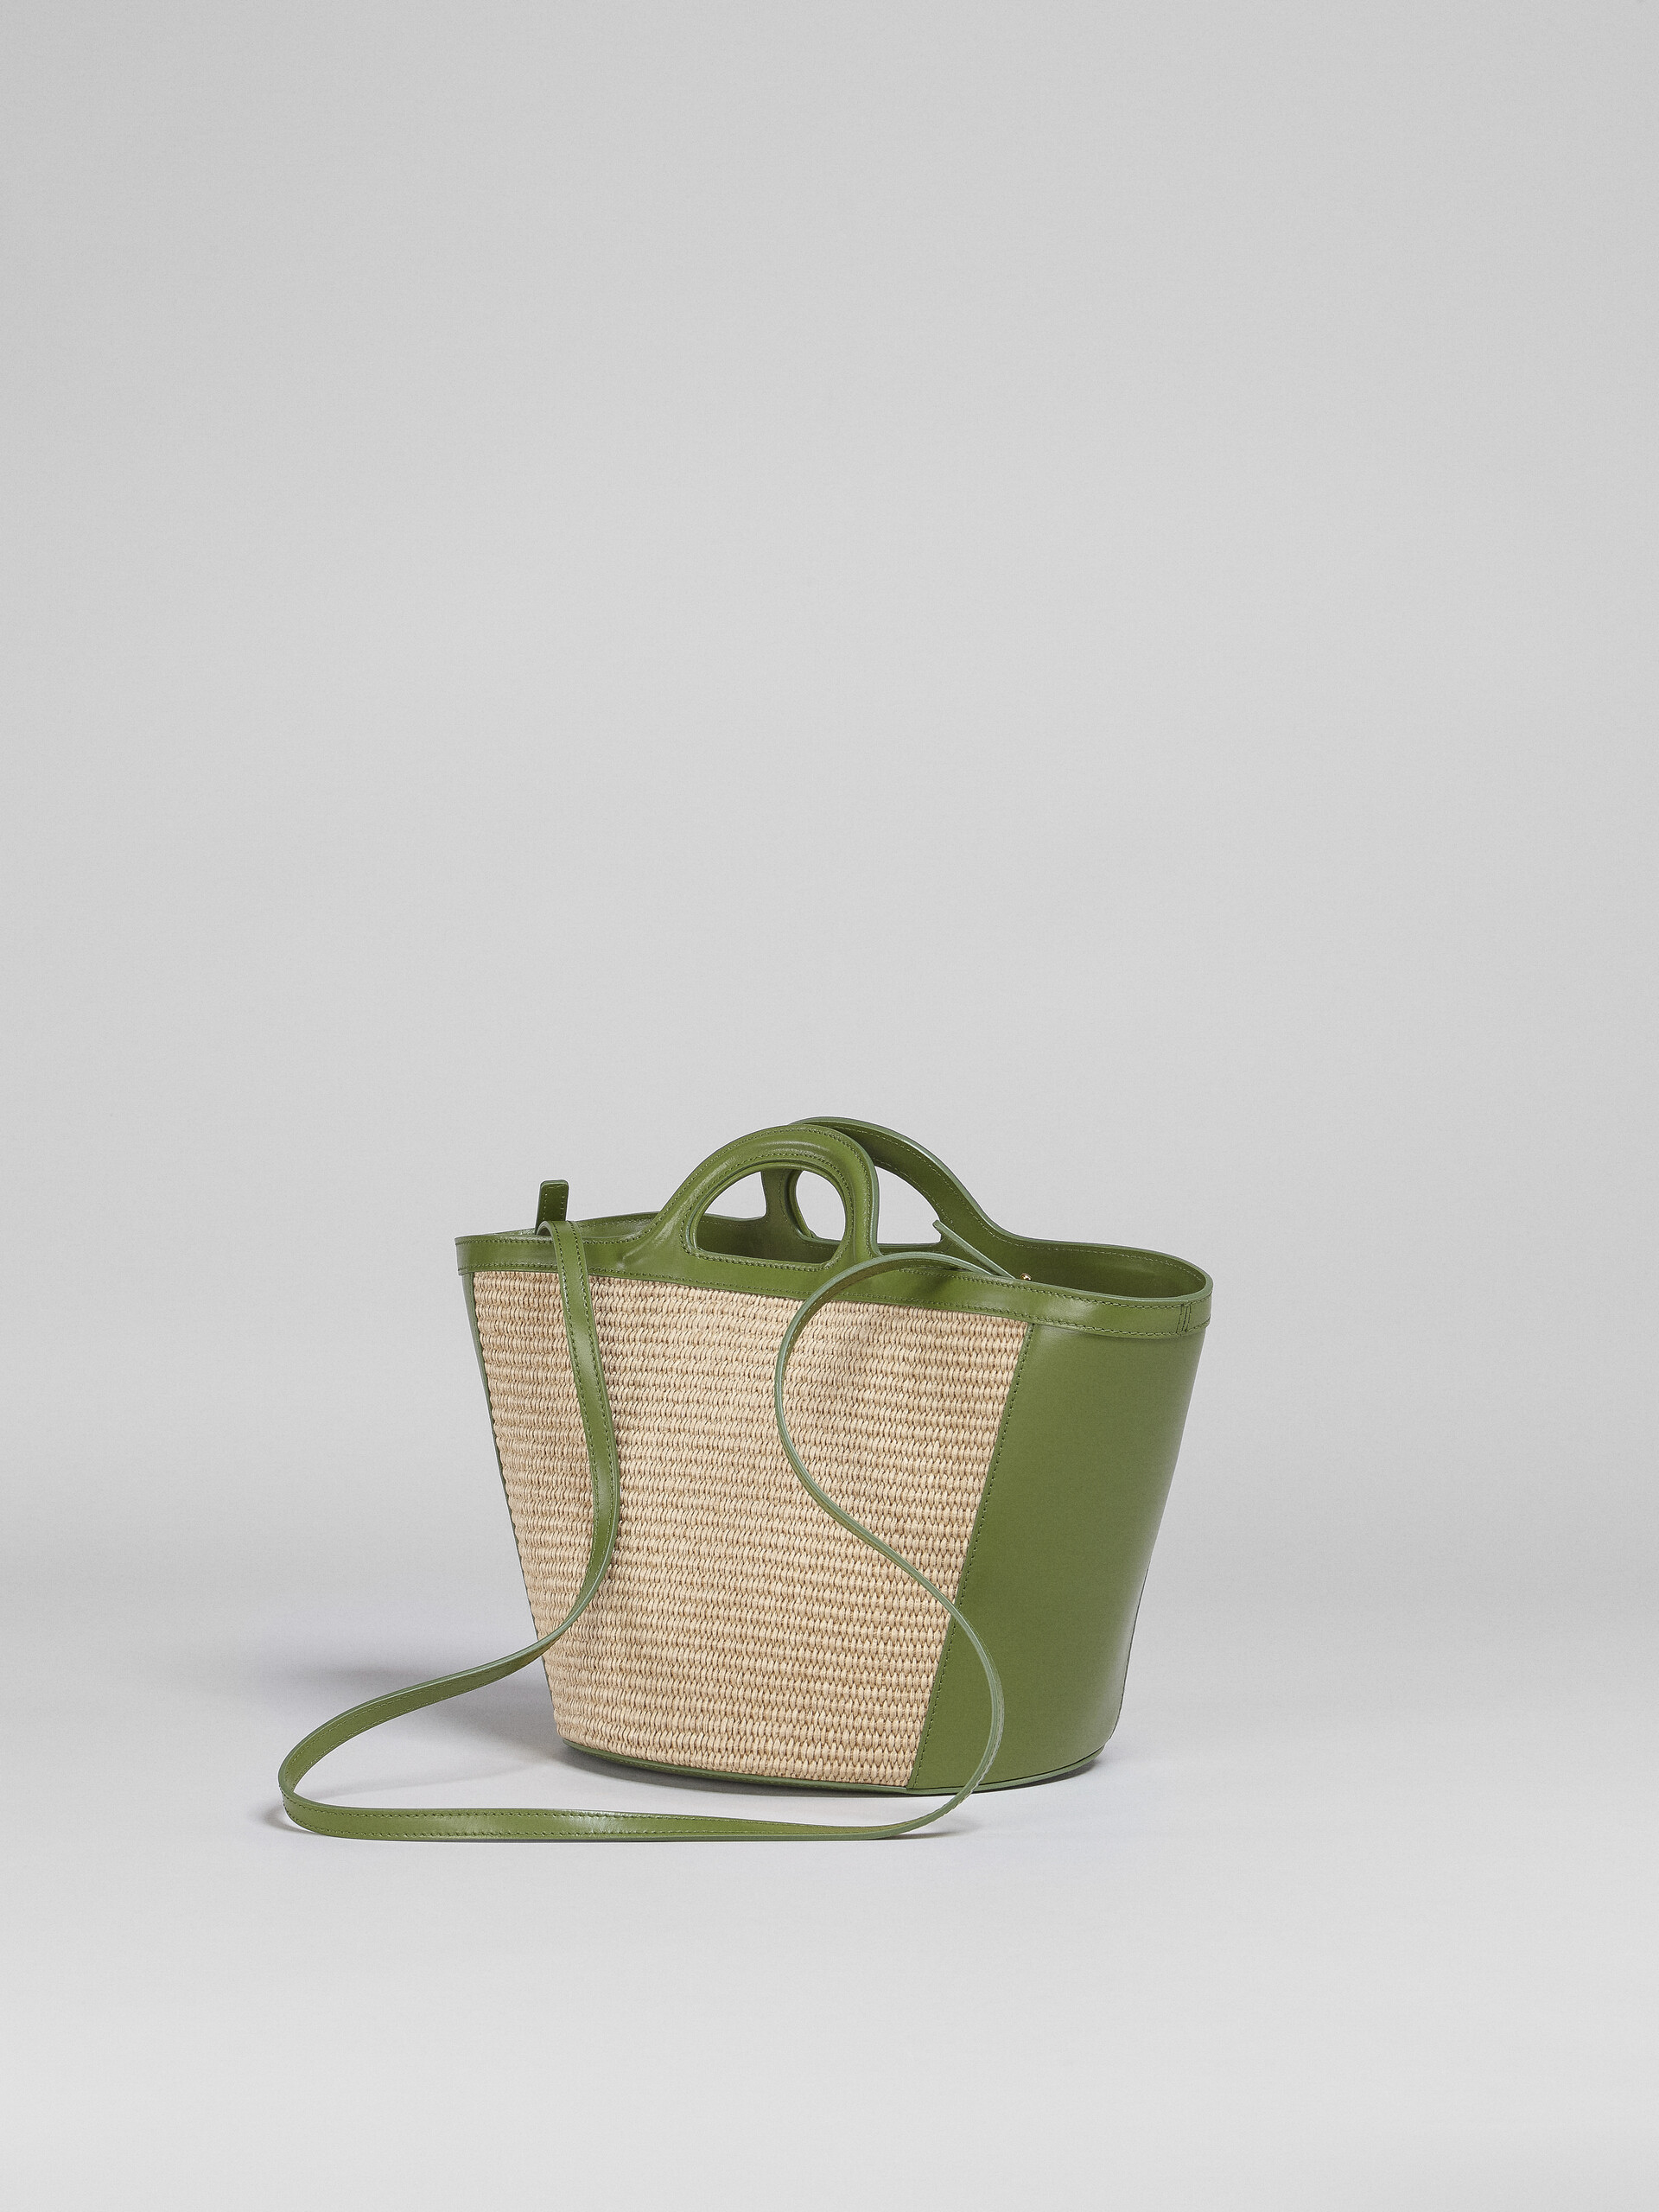 TROPICALIA small bag in green leather and raffia - Handbag - Image 3